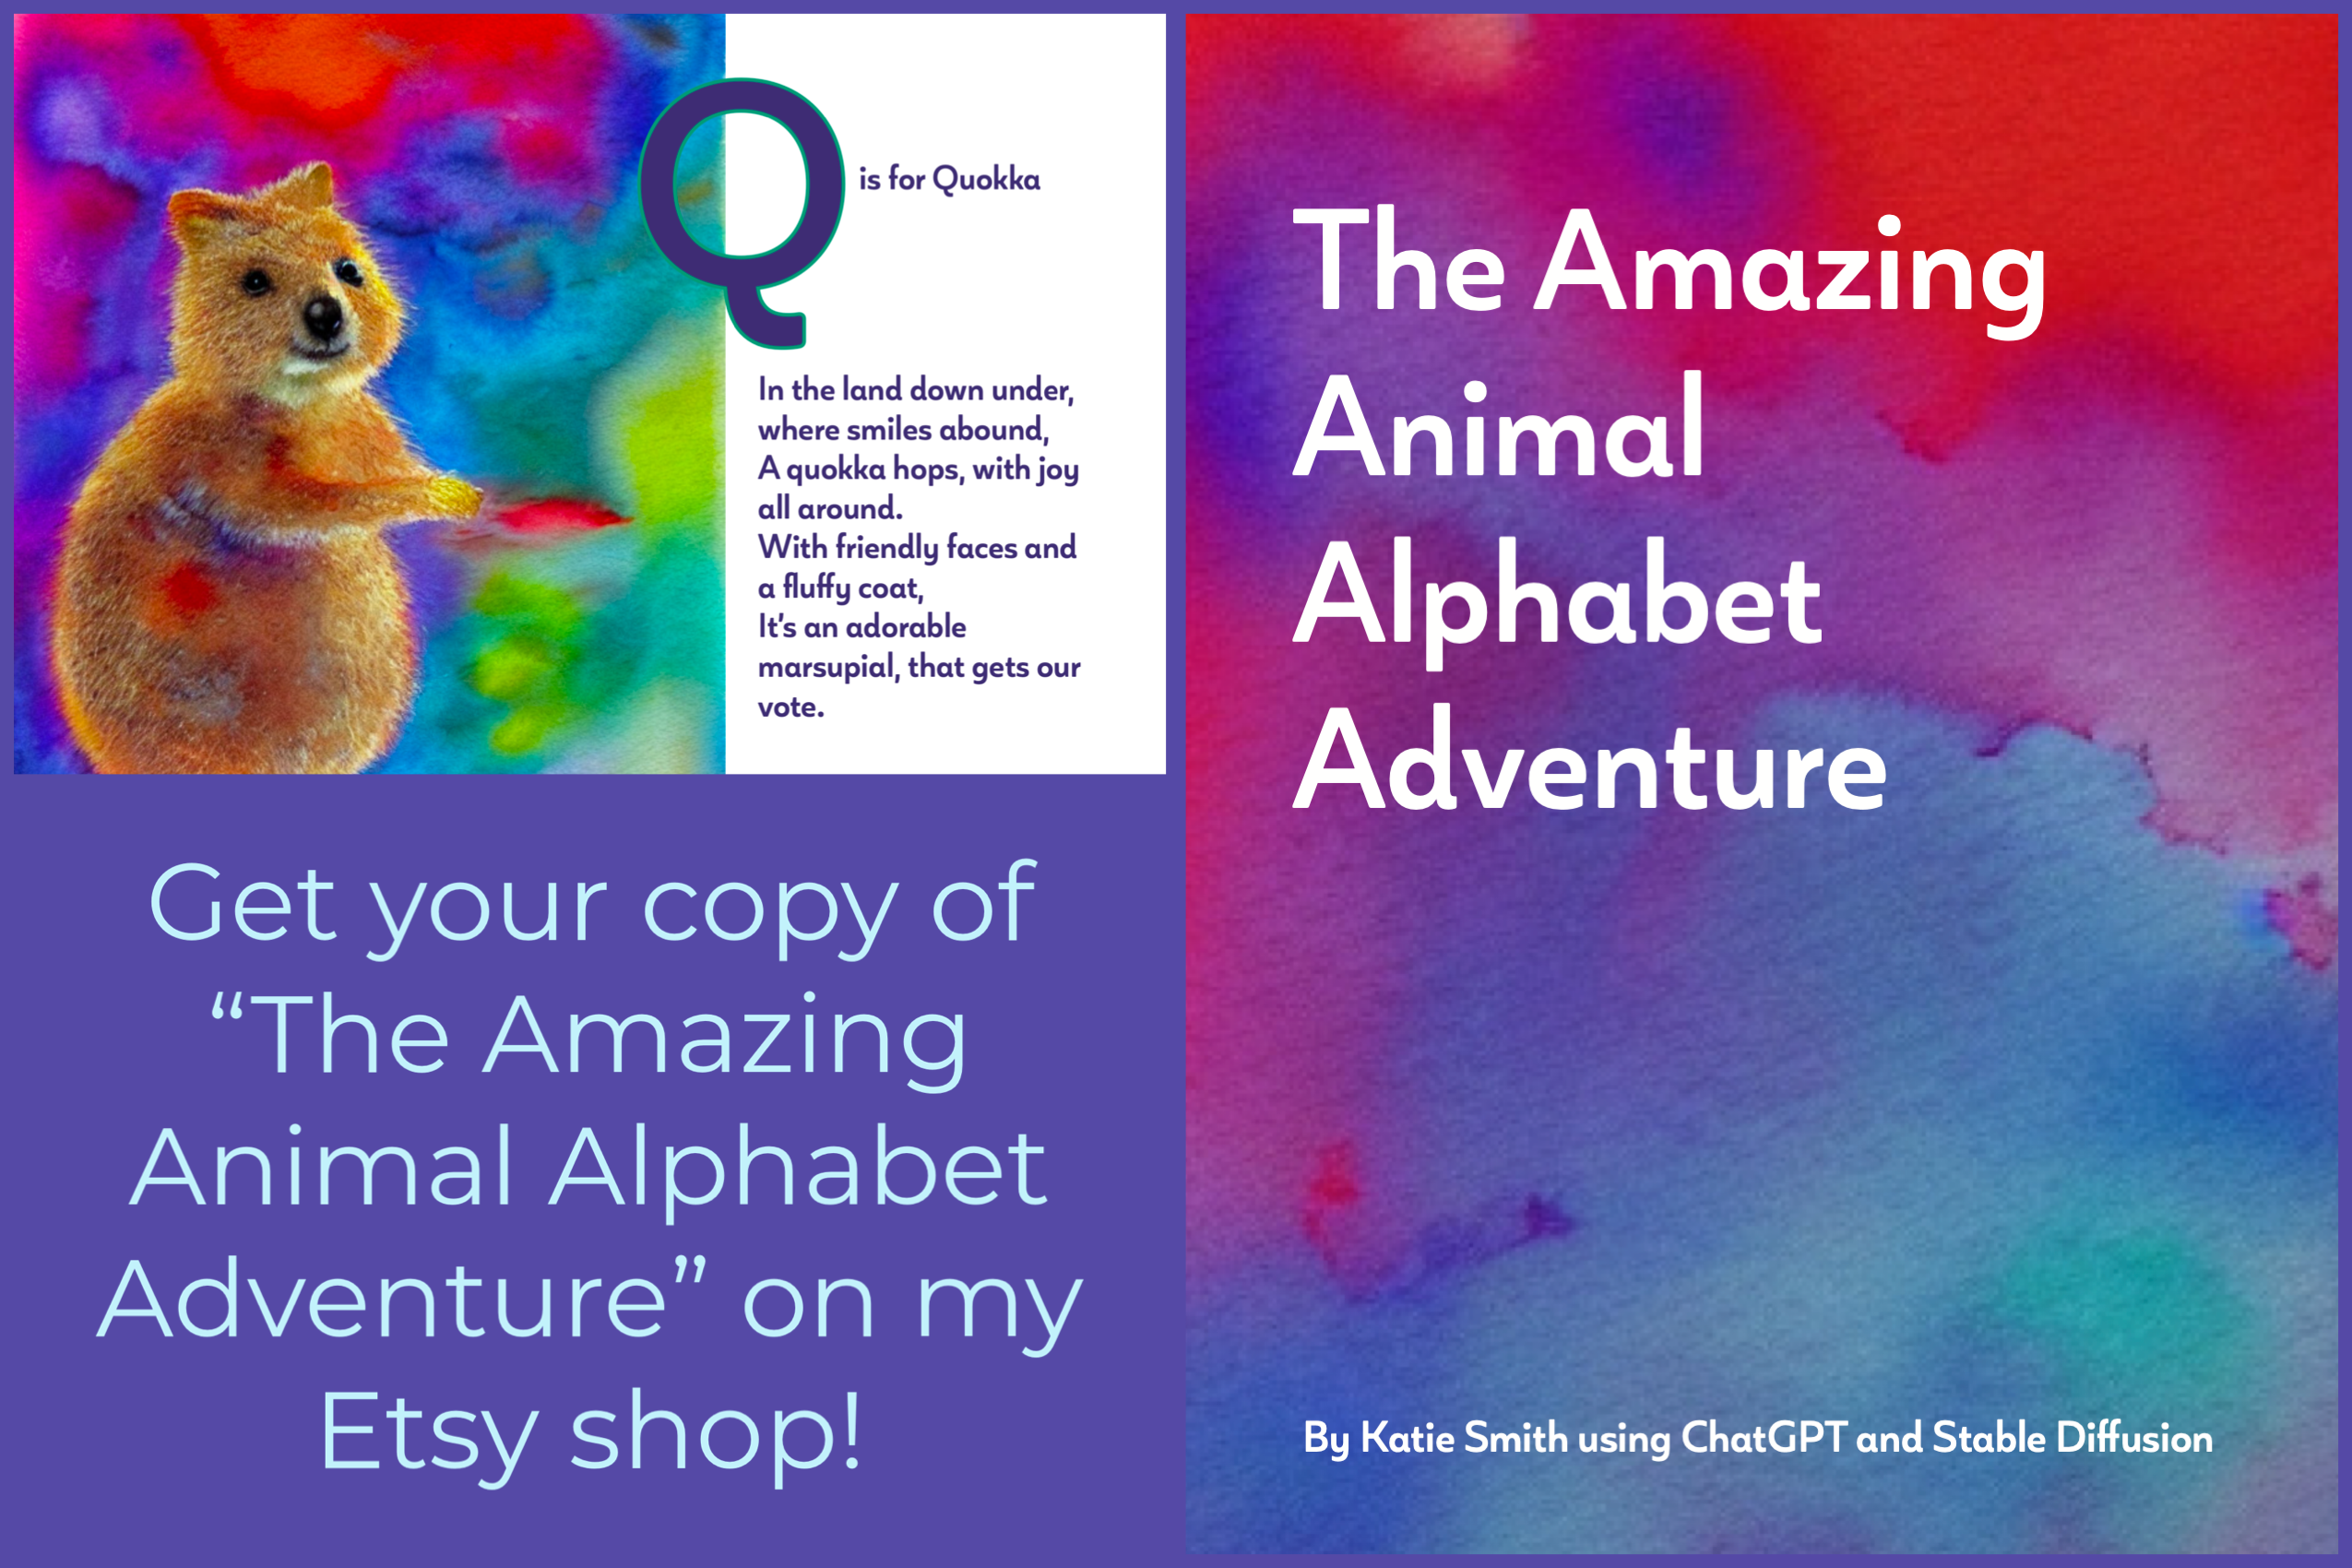 Get a copy of &ldquo;The Amazing Animal Alphabet Adventure&rdquo; on my Etsy shop!